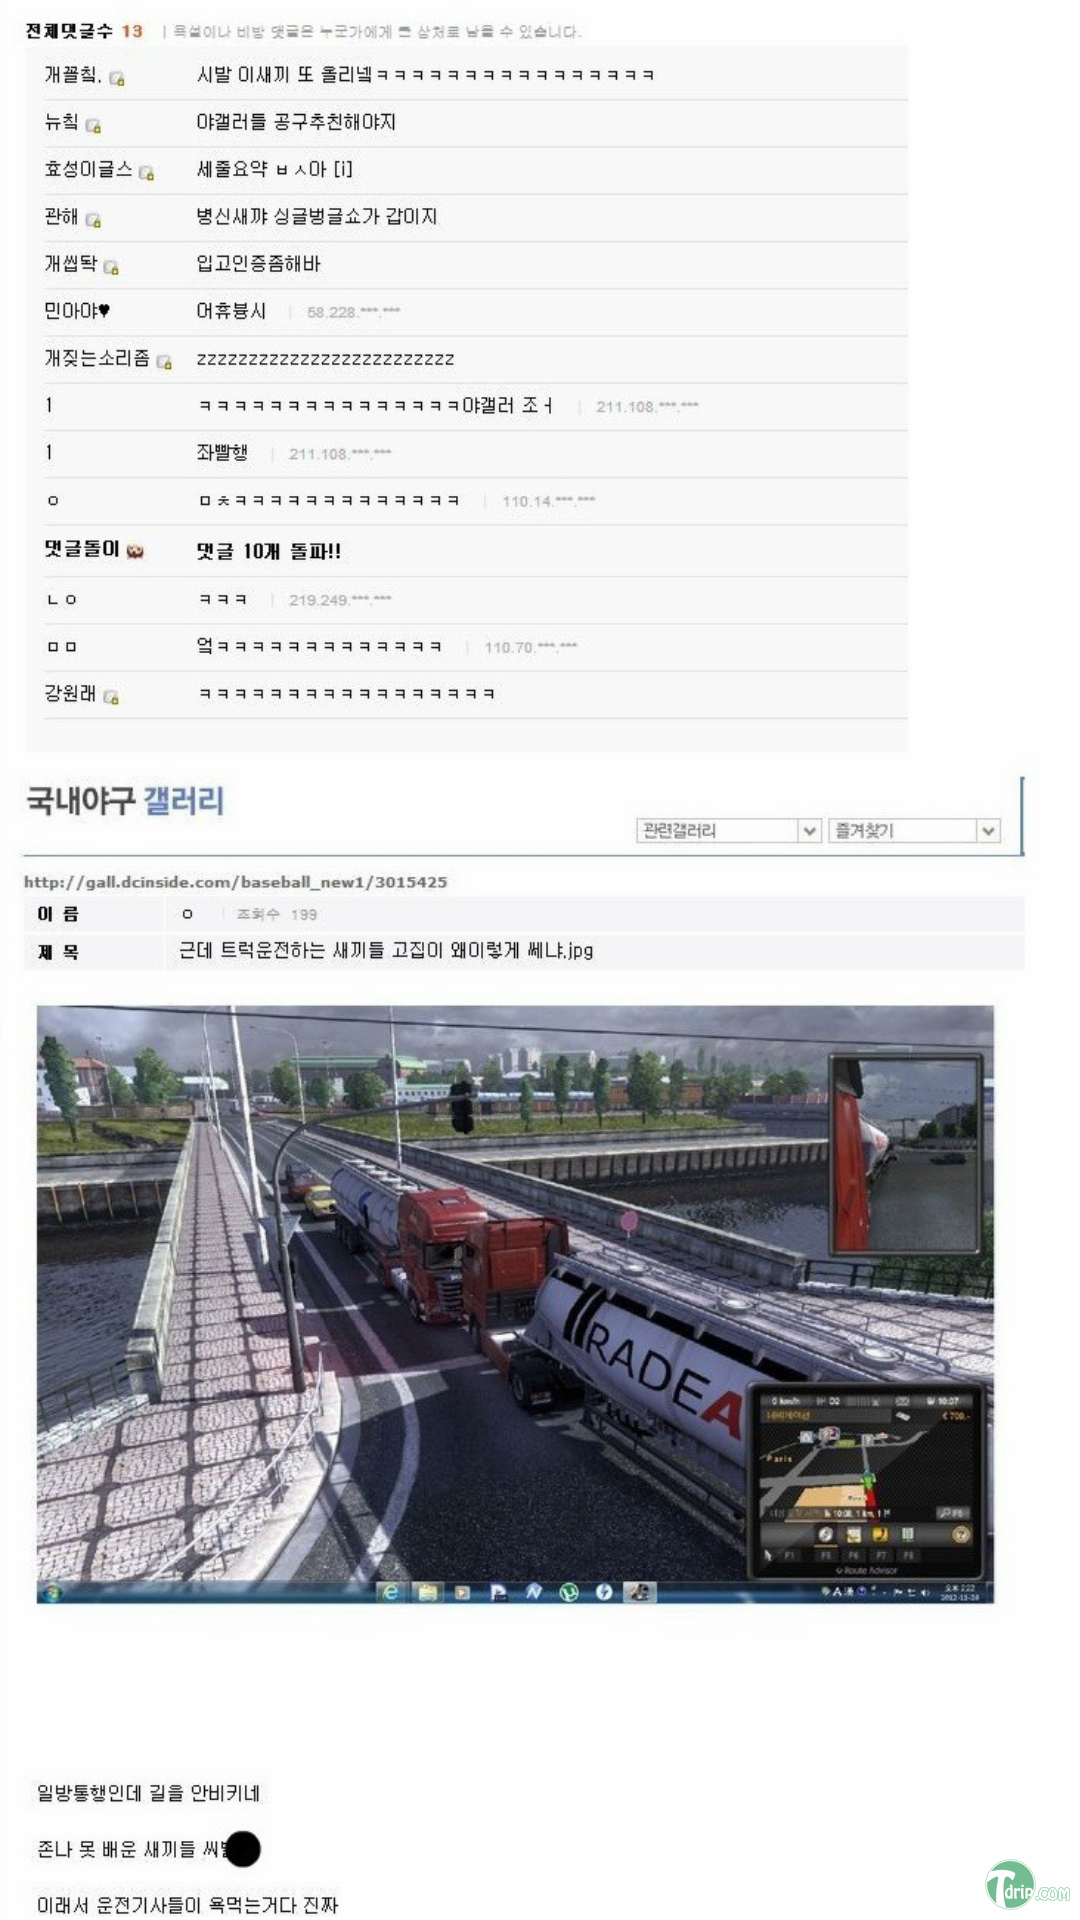 Screenshot_2014-11-17-18-08-06.png : 유로트럭-야물연대 레전설